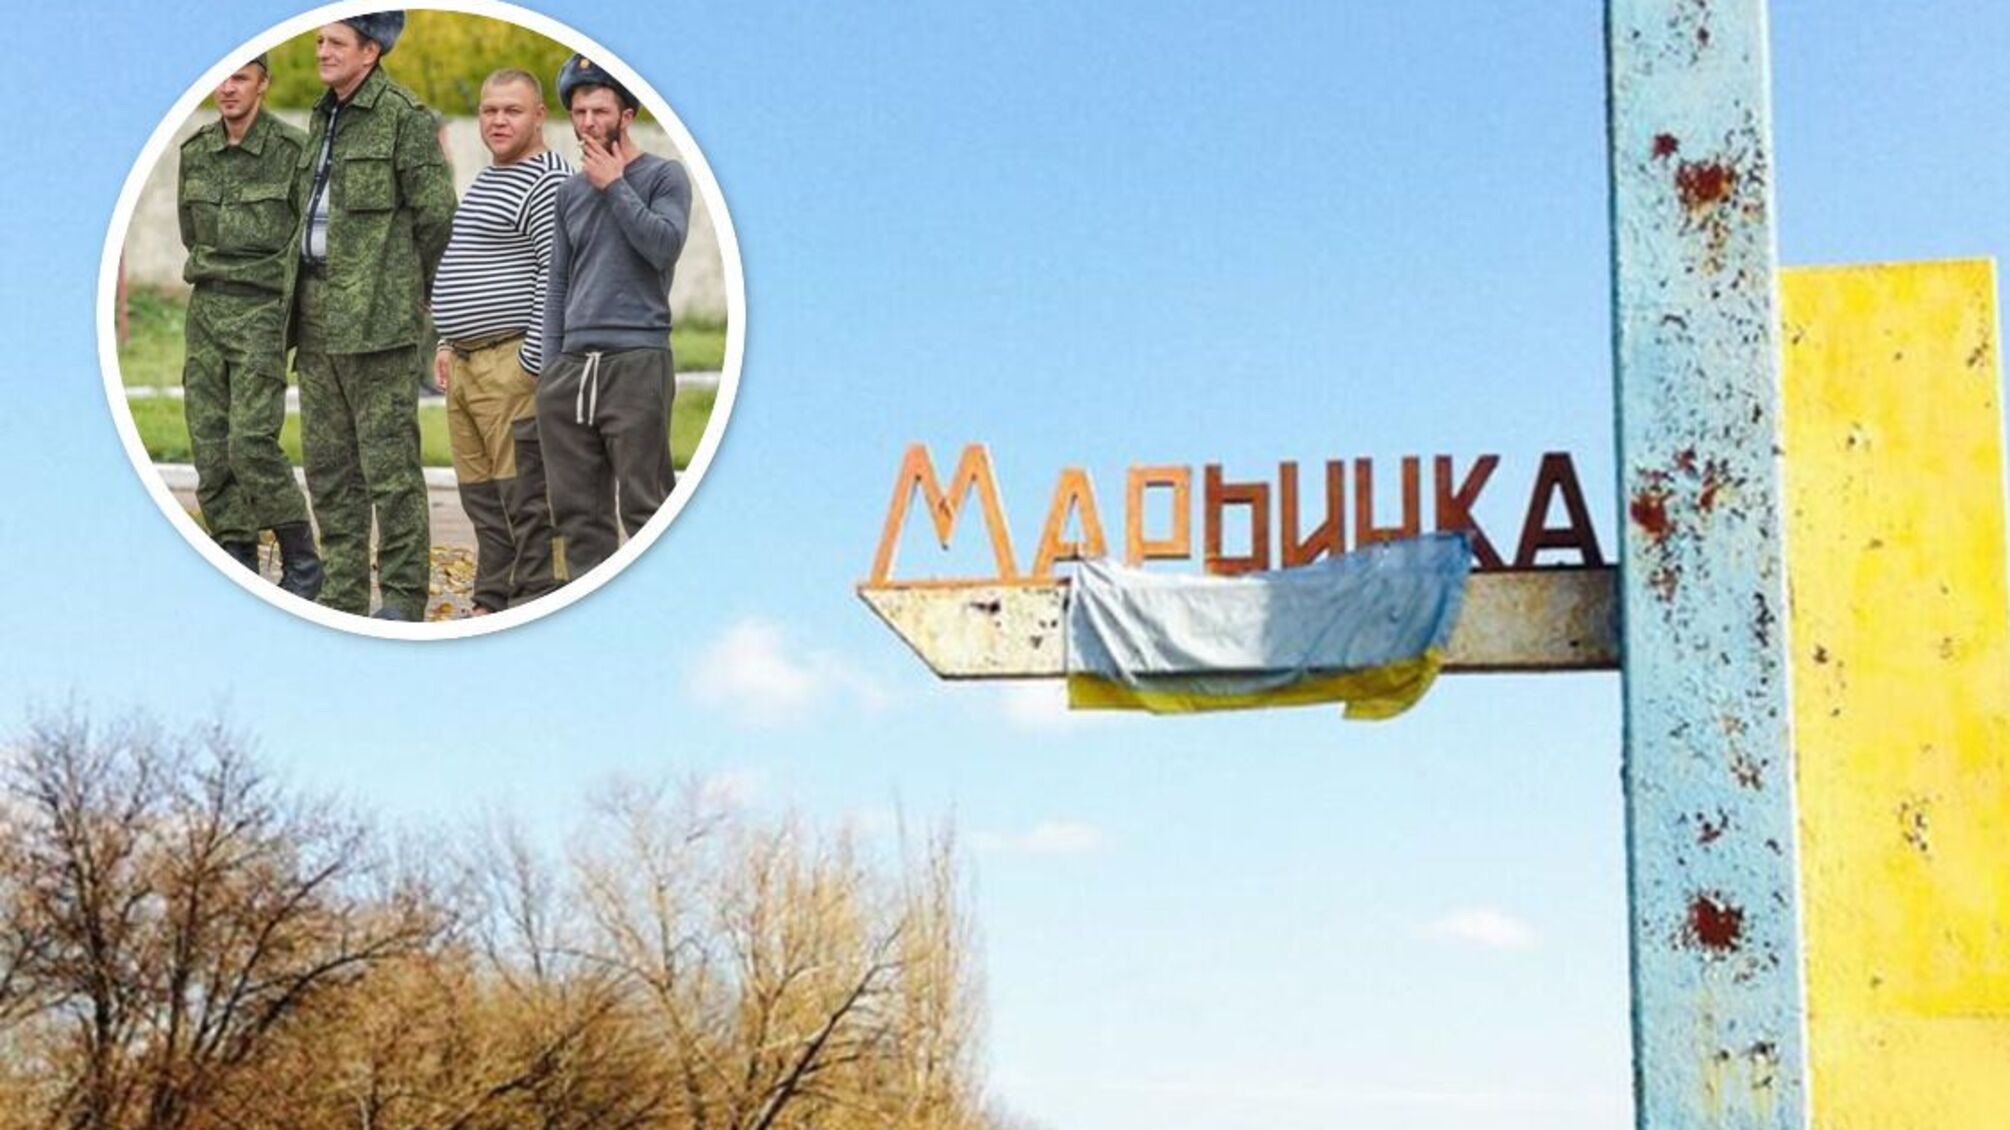 Мар'їнка - місто-супутник Донецька - за 400 днів армія рф просунулась на 3 км